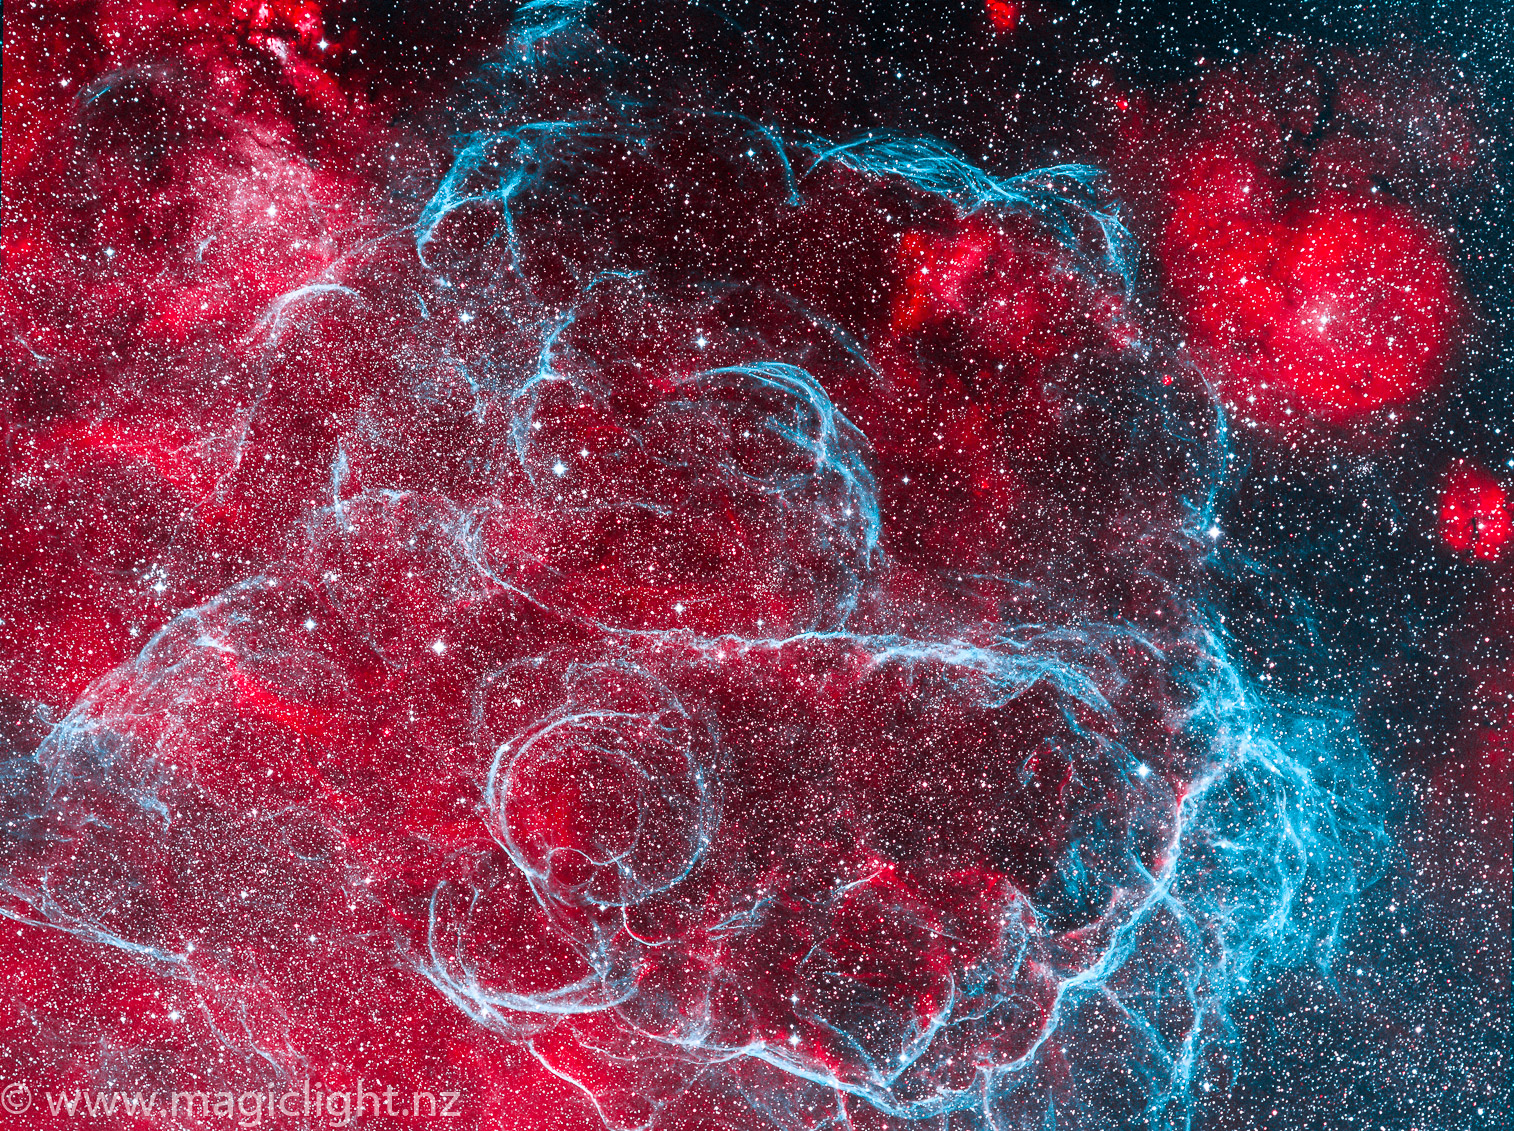 Vela Supernova in HOO